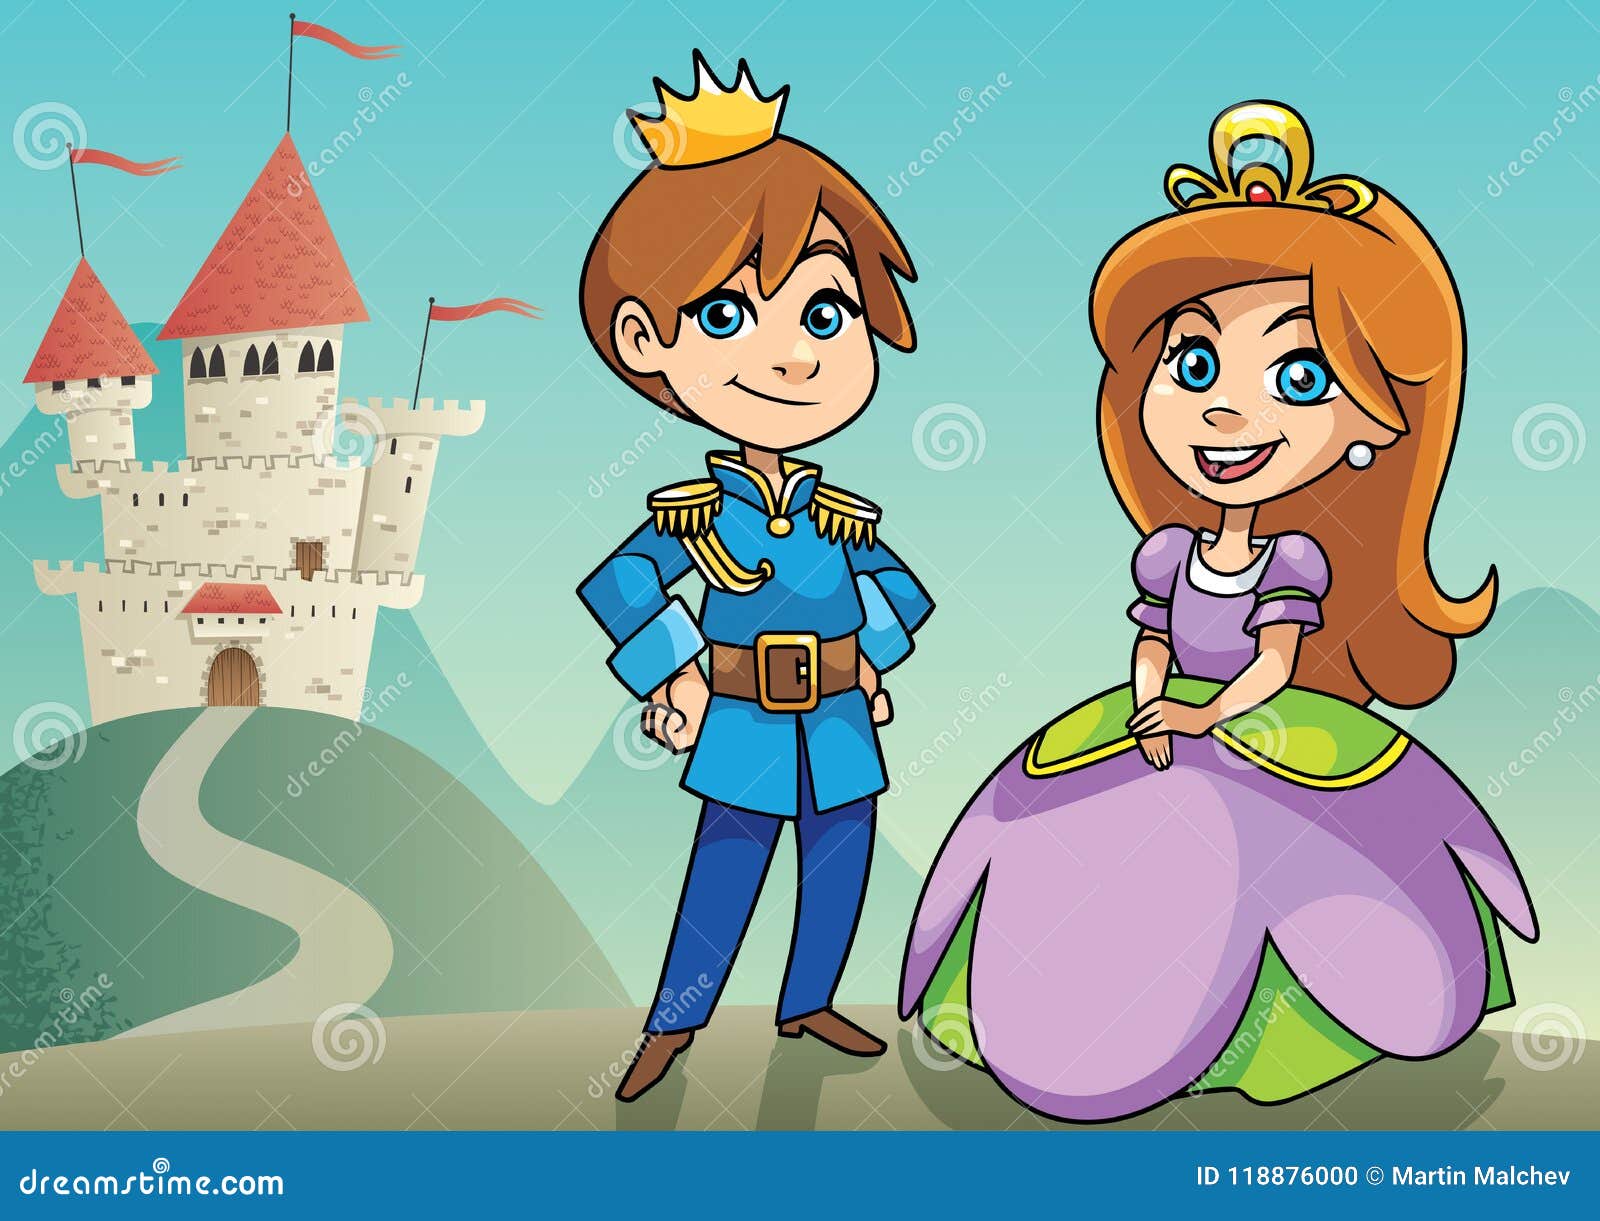 Prince and Princess stock vector. Illustration of cartoon - 118876000